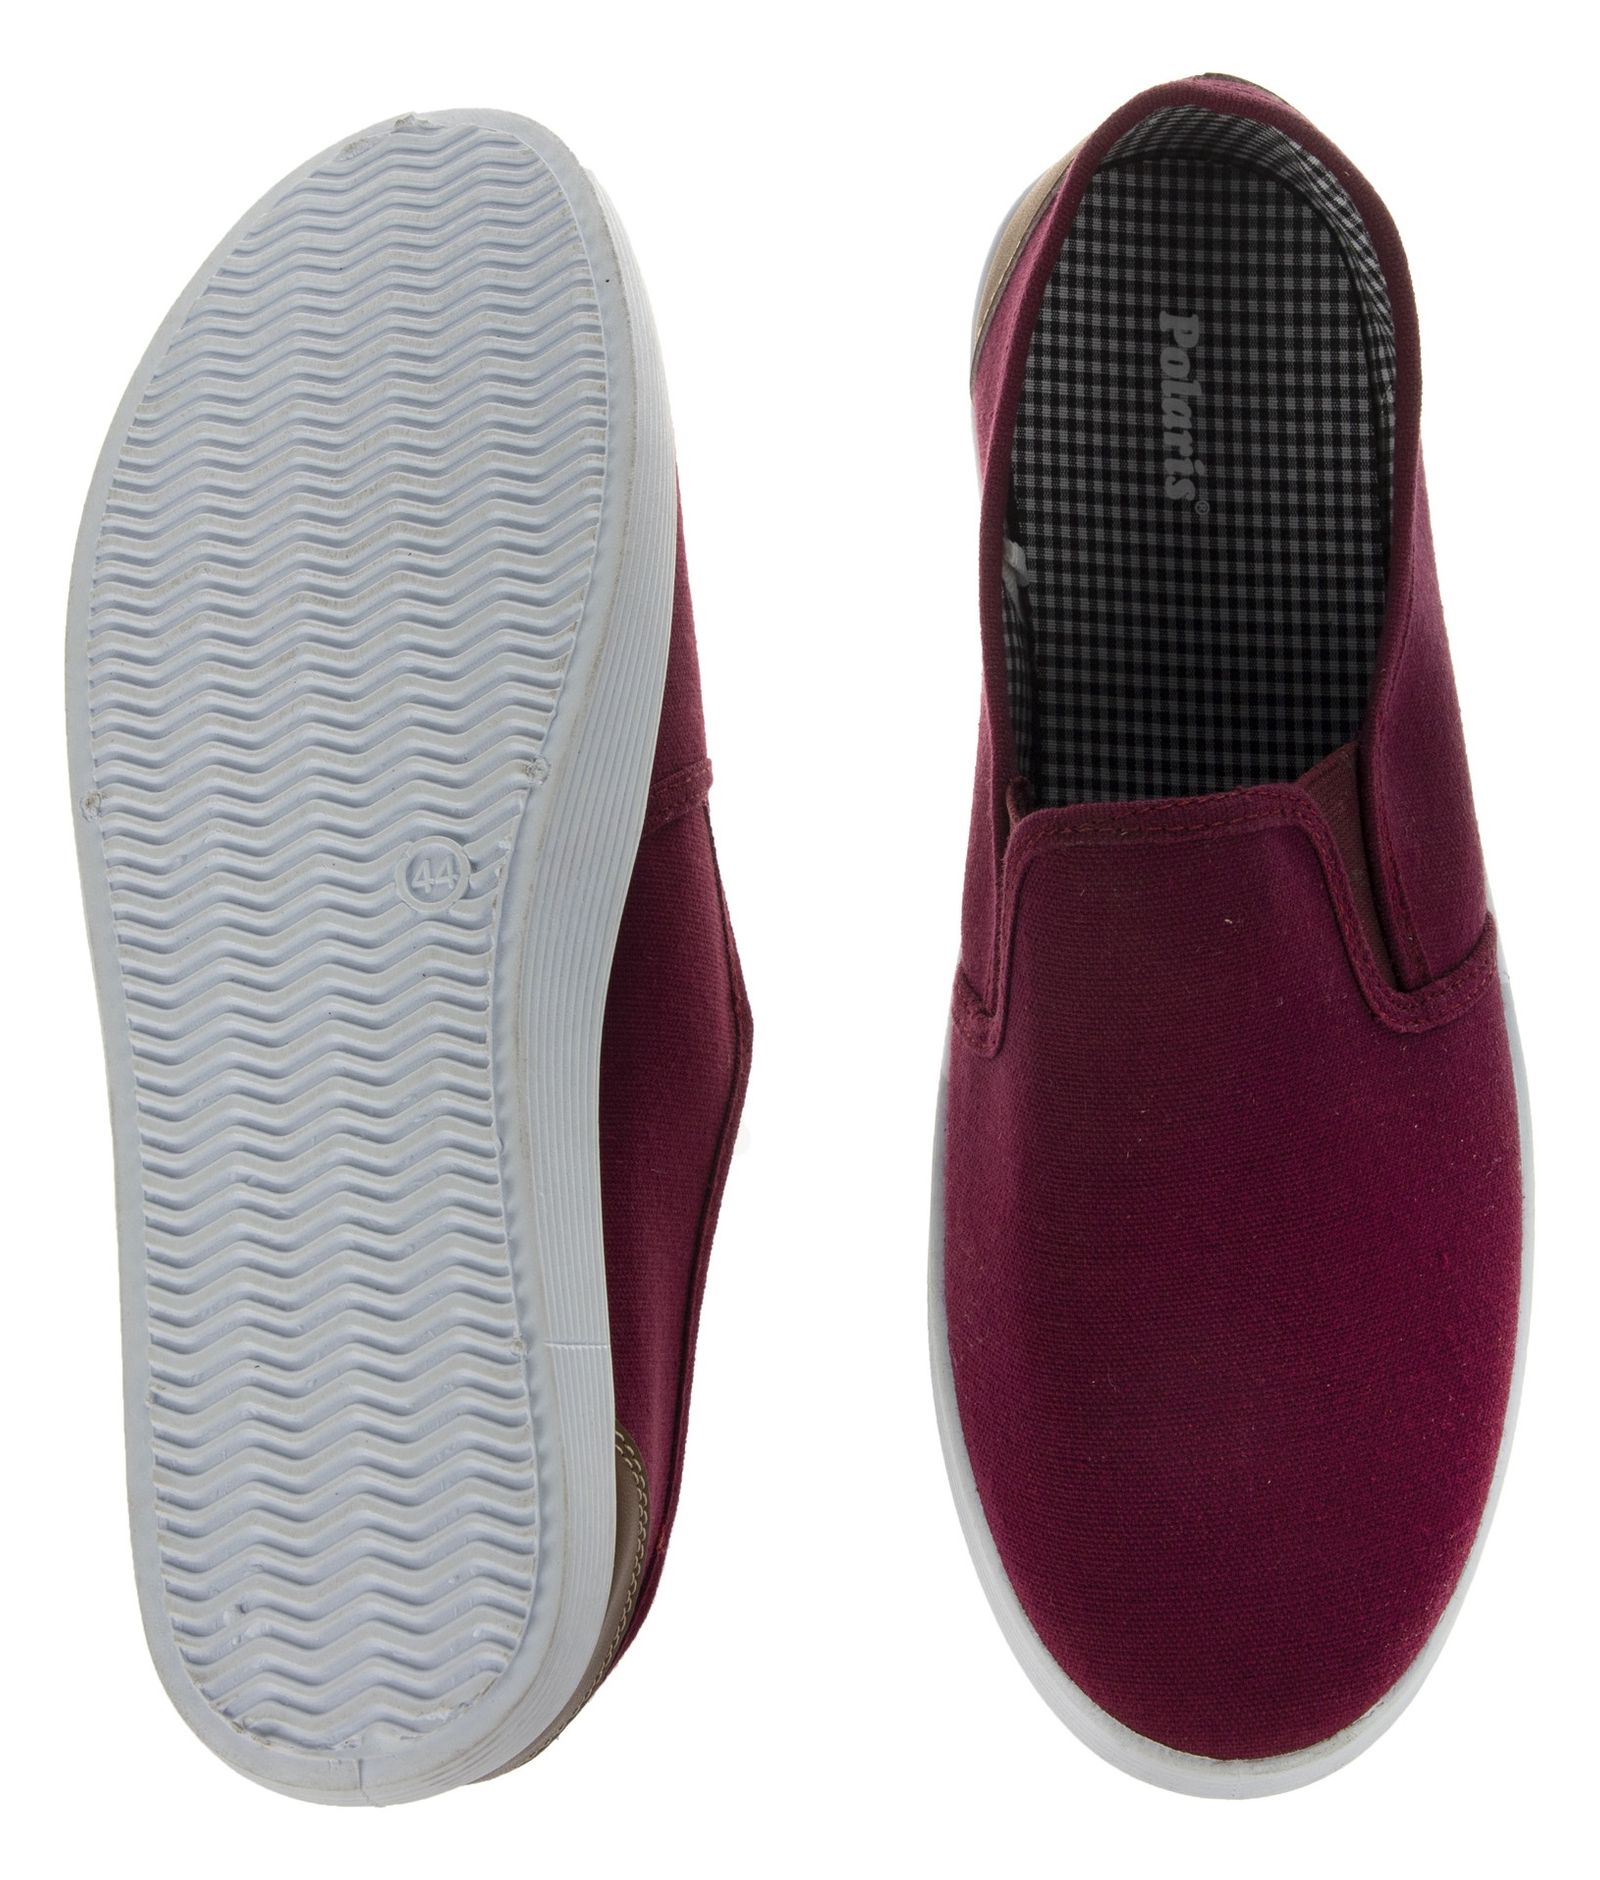 کفش روزمره مردانه پولاریس مدل 100294638-104 - زرشکی - 3